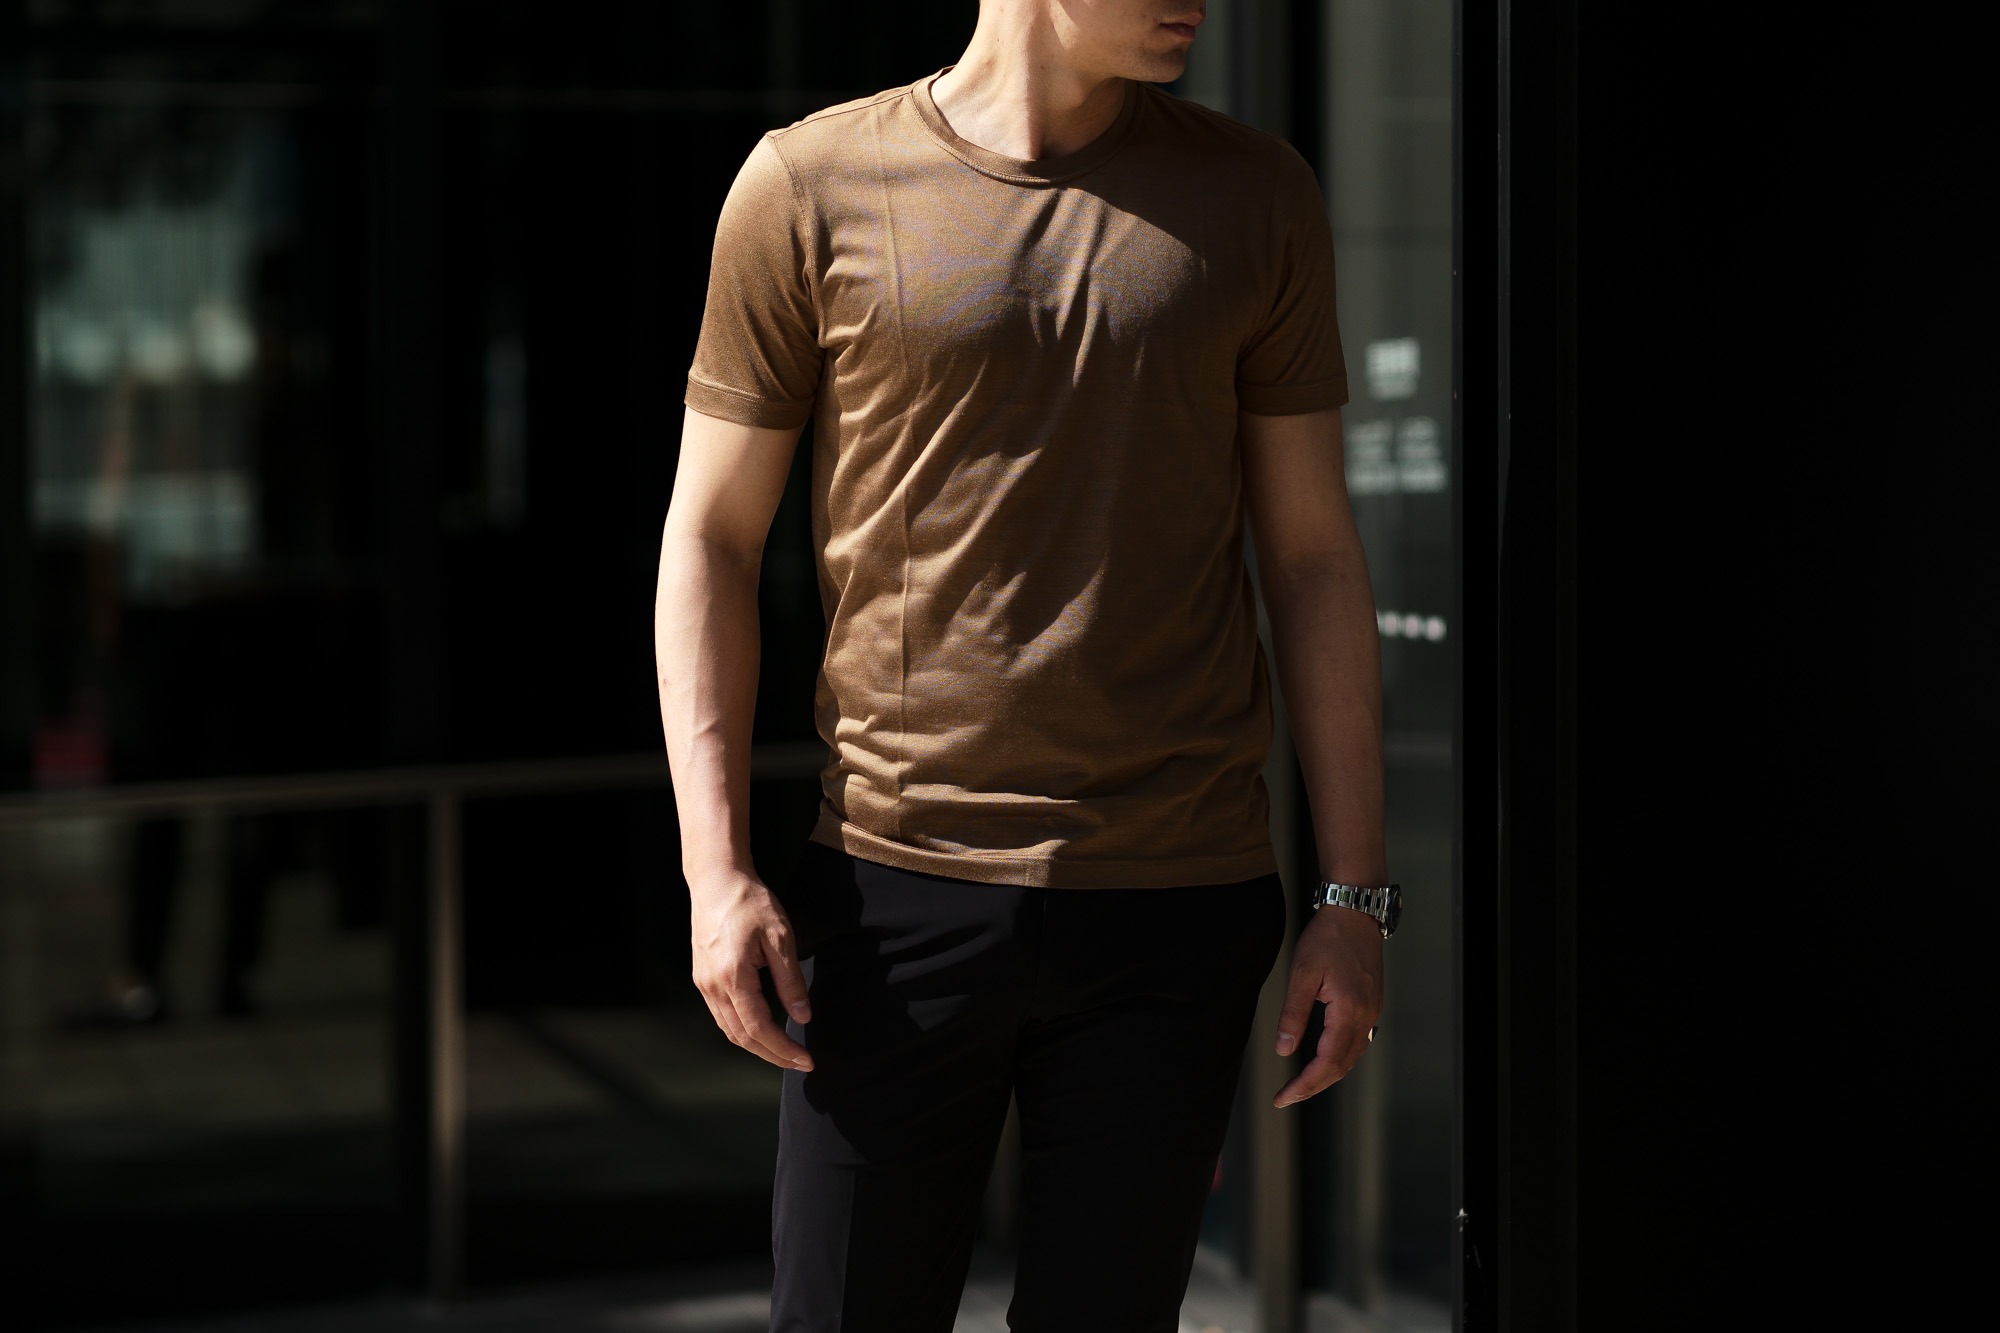 Gran Sasso (グランサッソ) Silk T-shirt (シルク Tシャツ) SETA (シルク 100%) ショートスリーブ シルク Tシャツ GOLD (ゴールド・160) made in italy (イタリア製) 2020 春夏新作  愛知 名古屋 altoediritto アルトエデリット